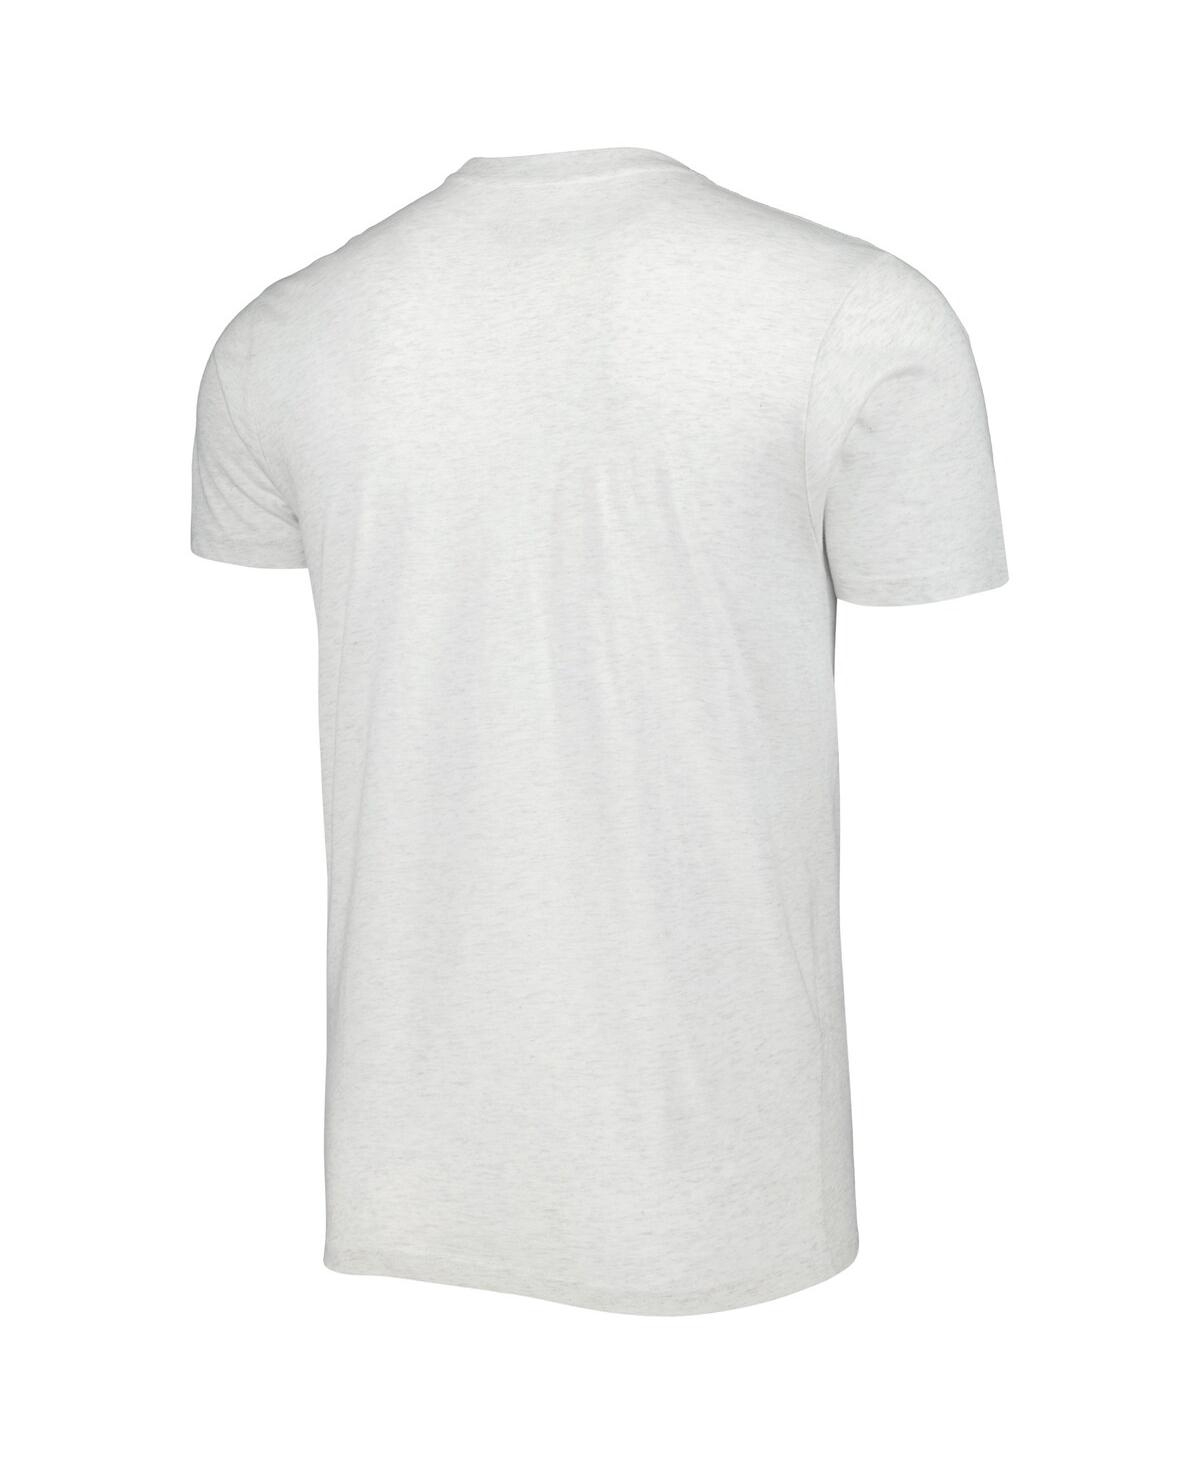 Shop Sportiqe Men's  Ash Chicago Bulls Turbo Tri-blend T-shirt